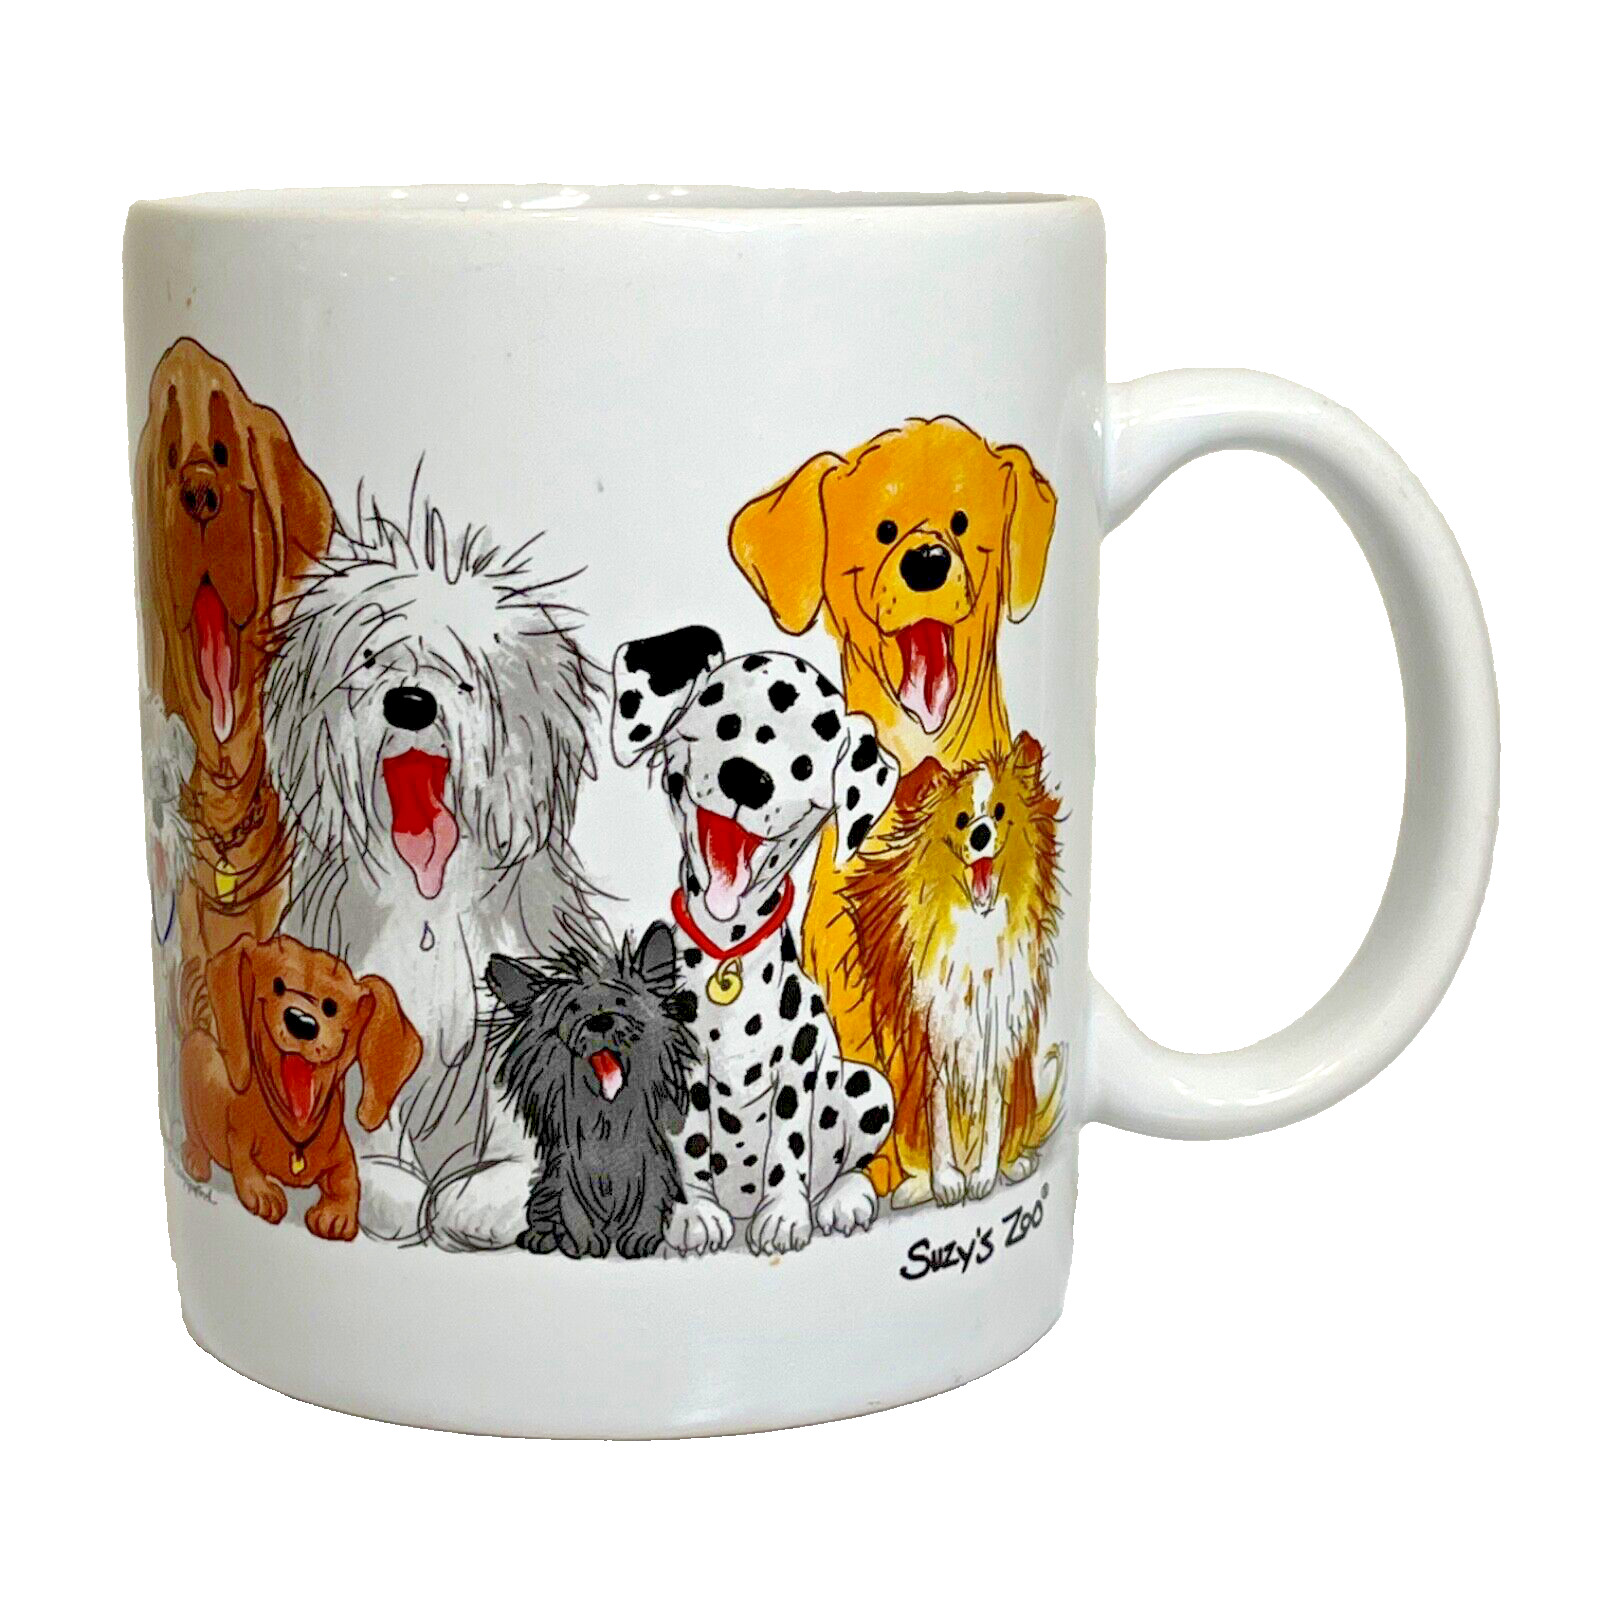 Vintage Mug Suzy\'s Zoo Dogs of Duckport 8 Cute Dog Breeds Woof 1997 Coffee Tea